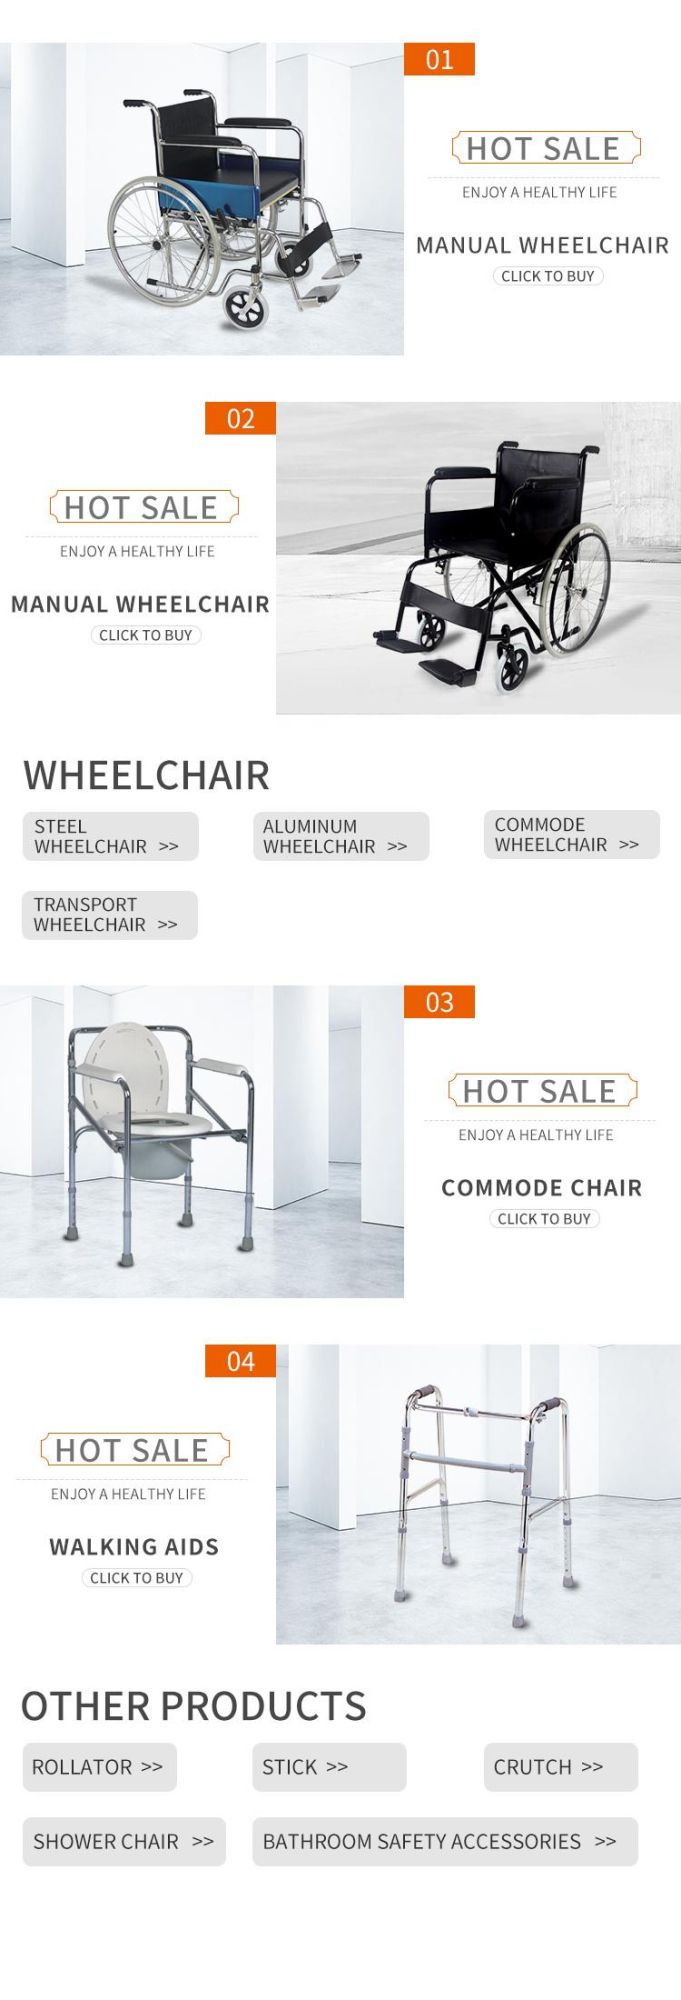 Steel Frame Waterproof Shower Transfer Chair Transport Chair Commode for Elderly